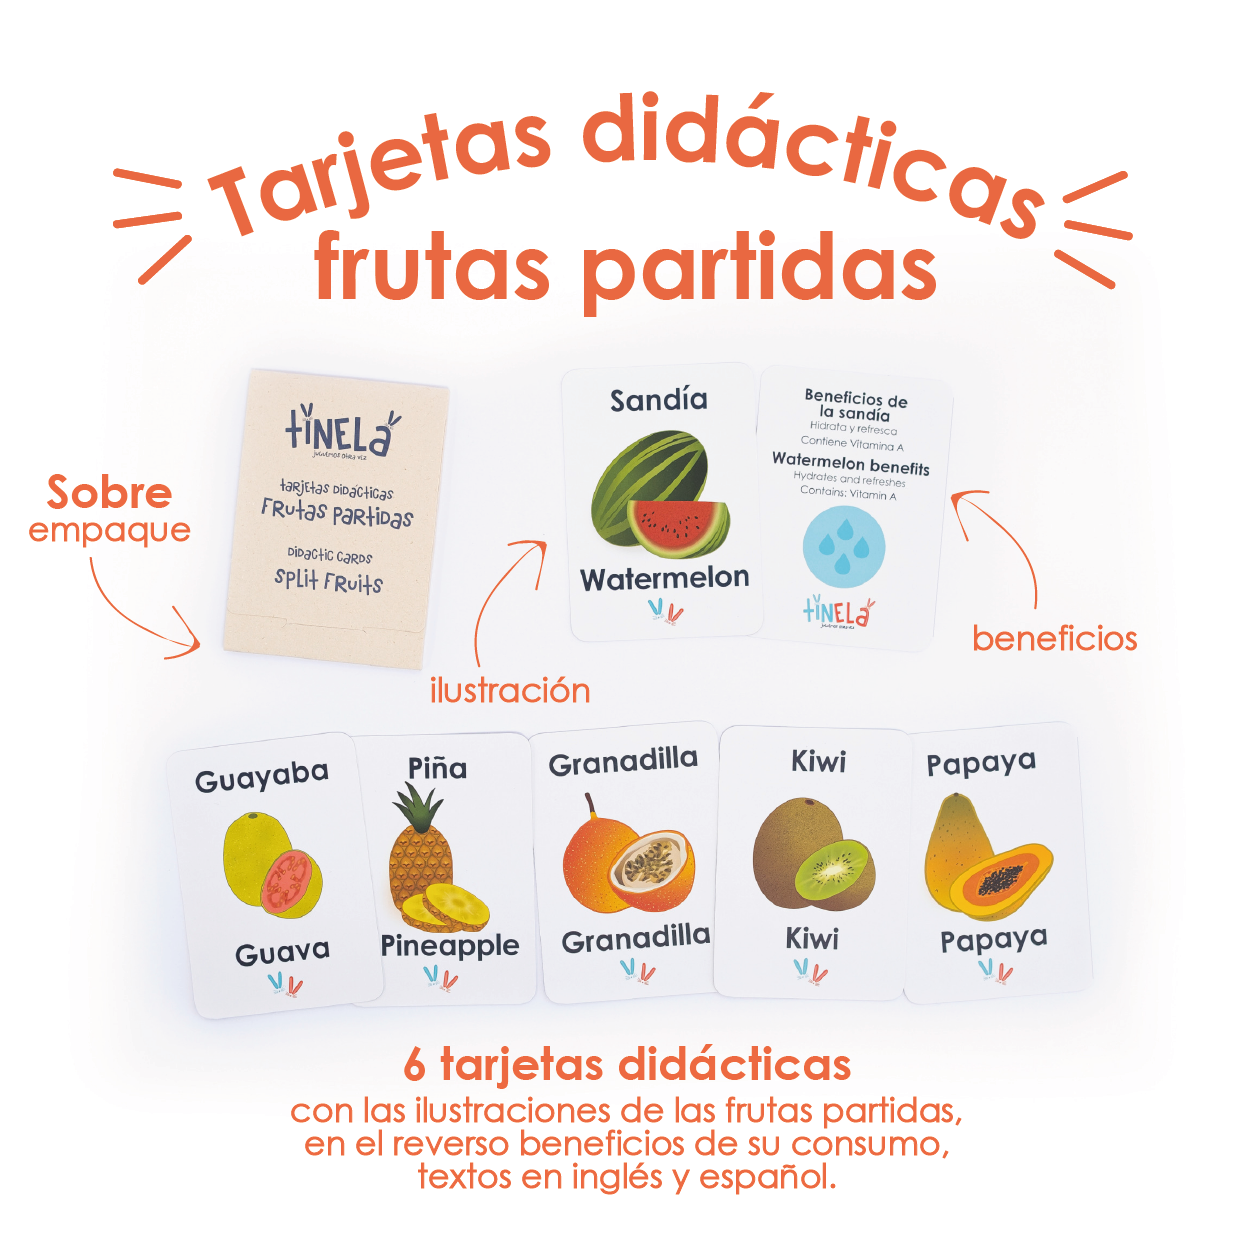 Kit De Frutas Partidas